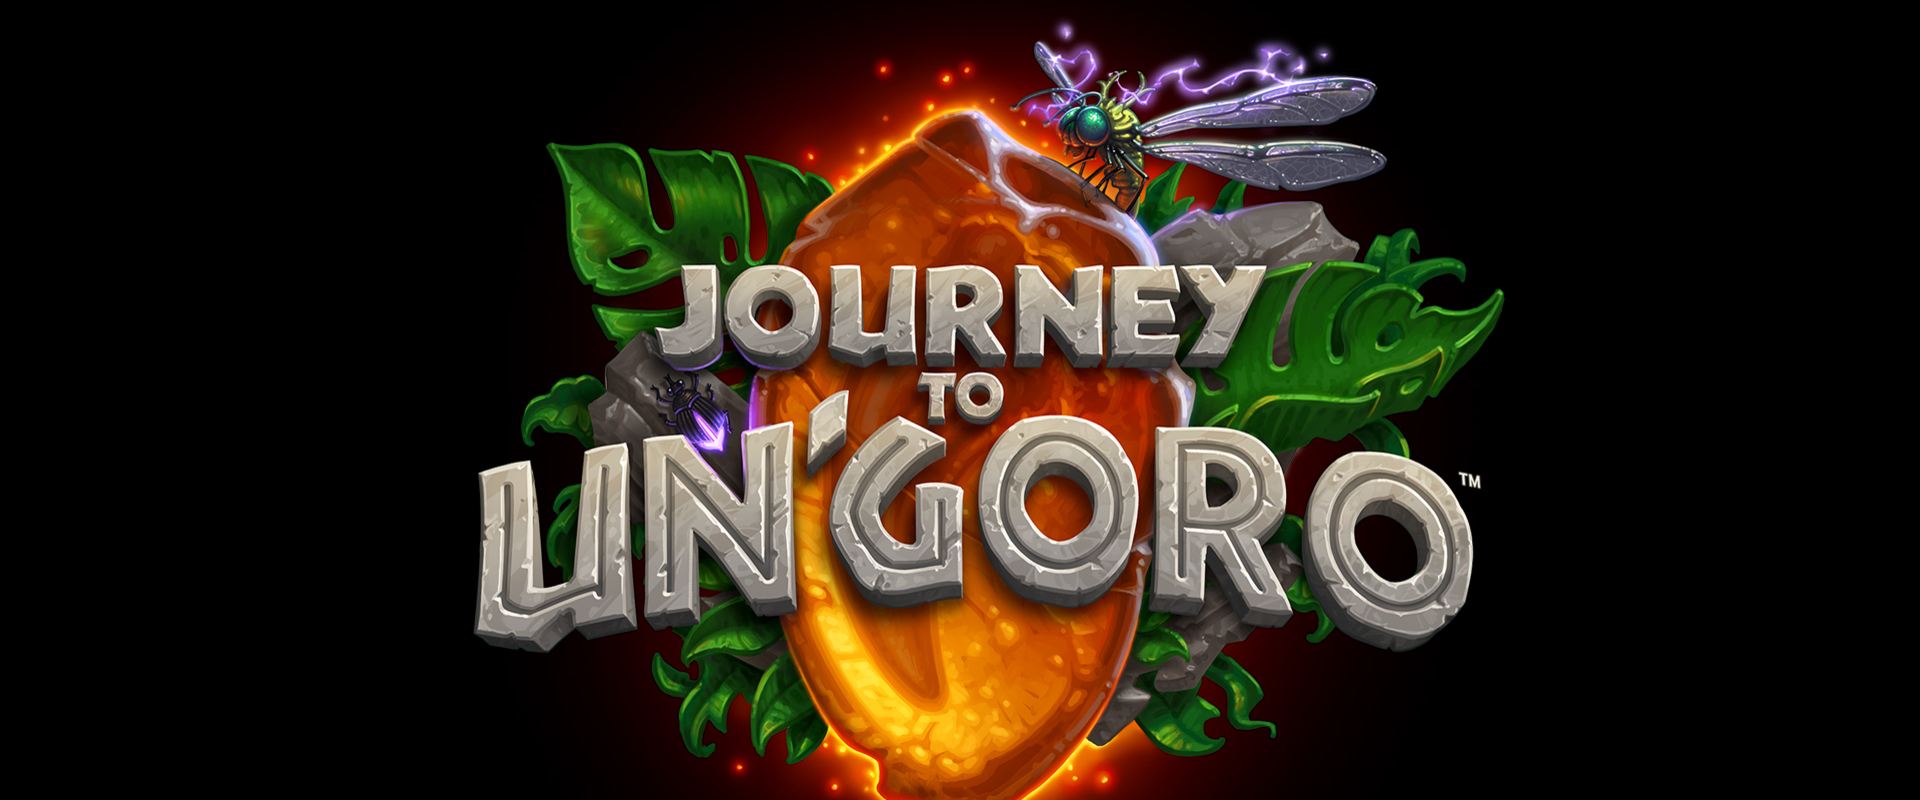 Journey to Un'Goro lapelemzés (1. rész)